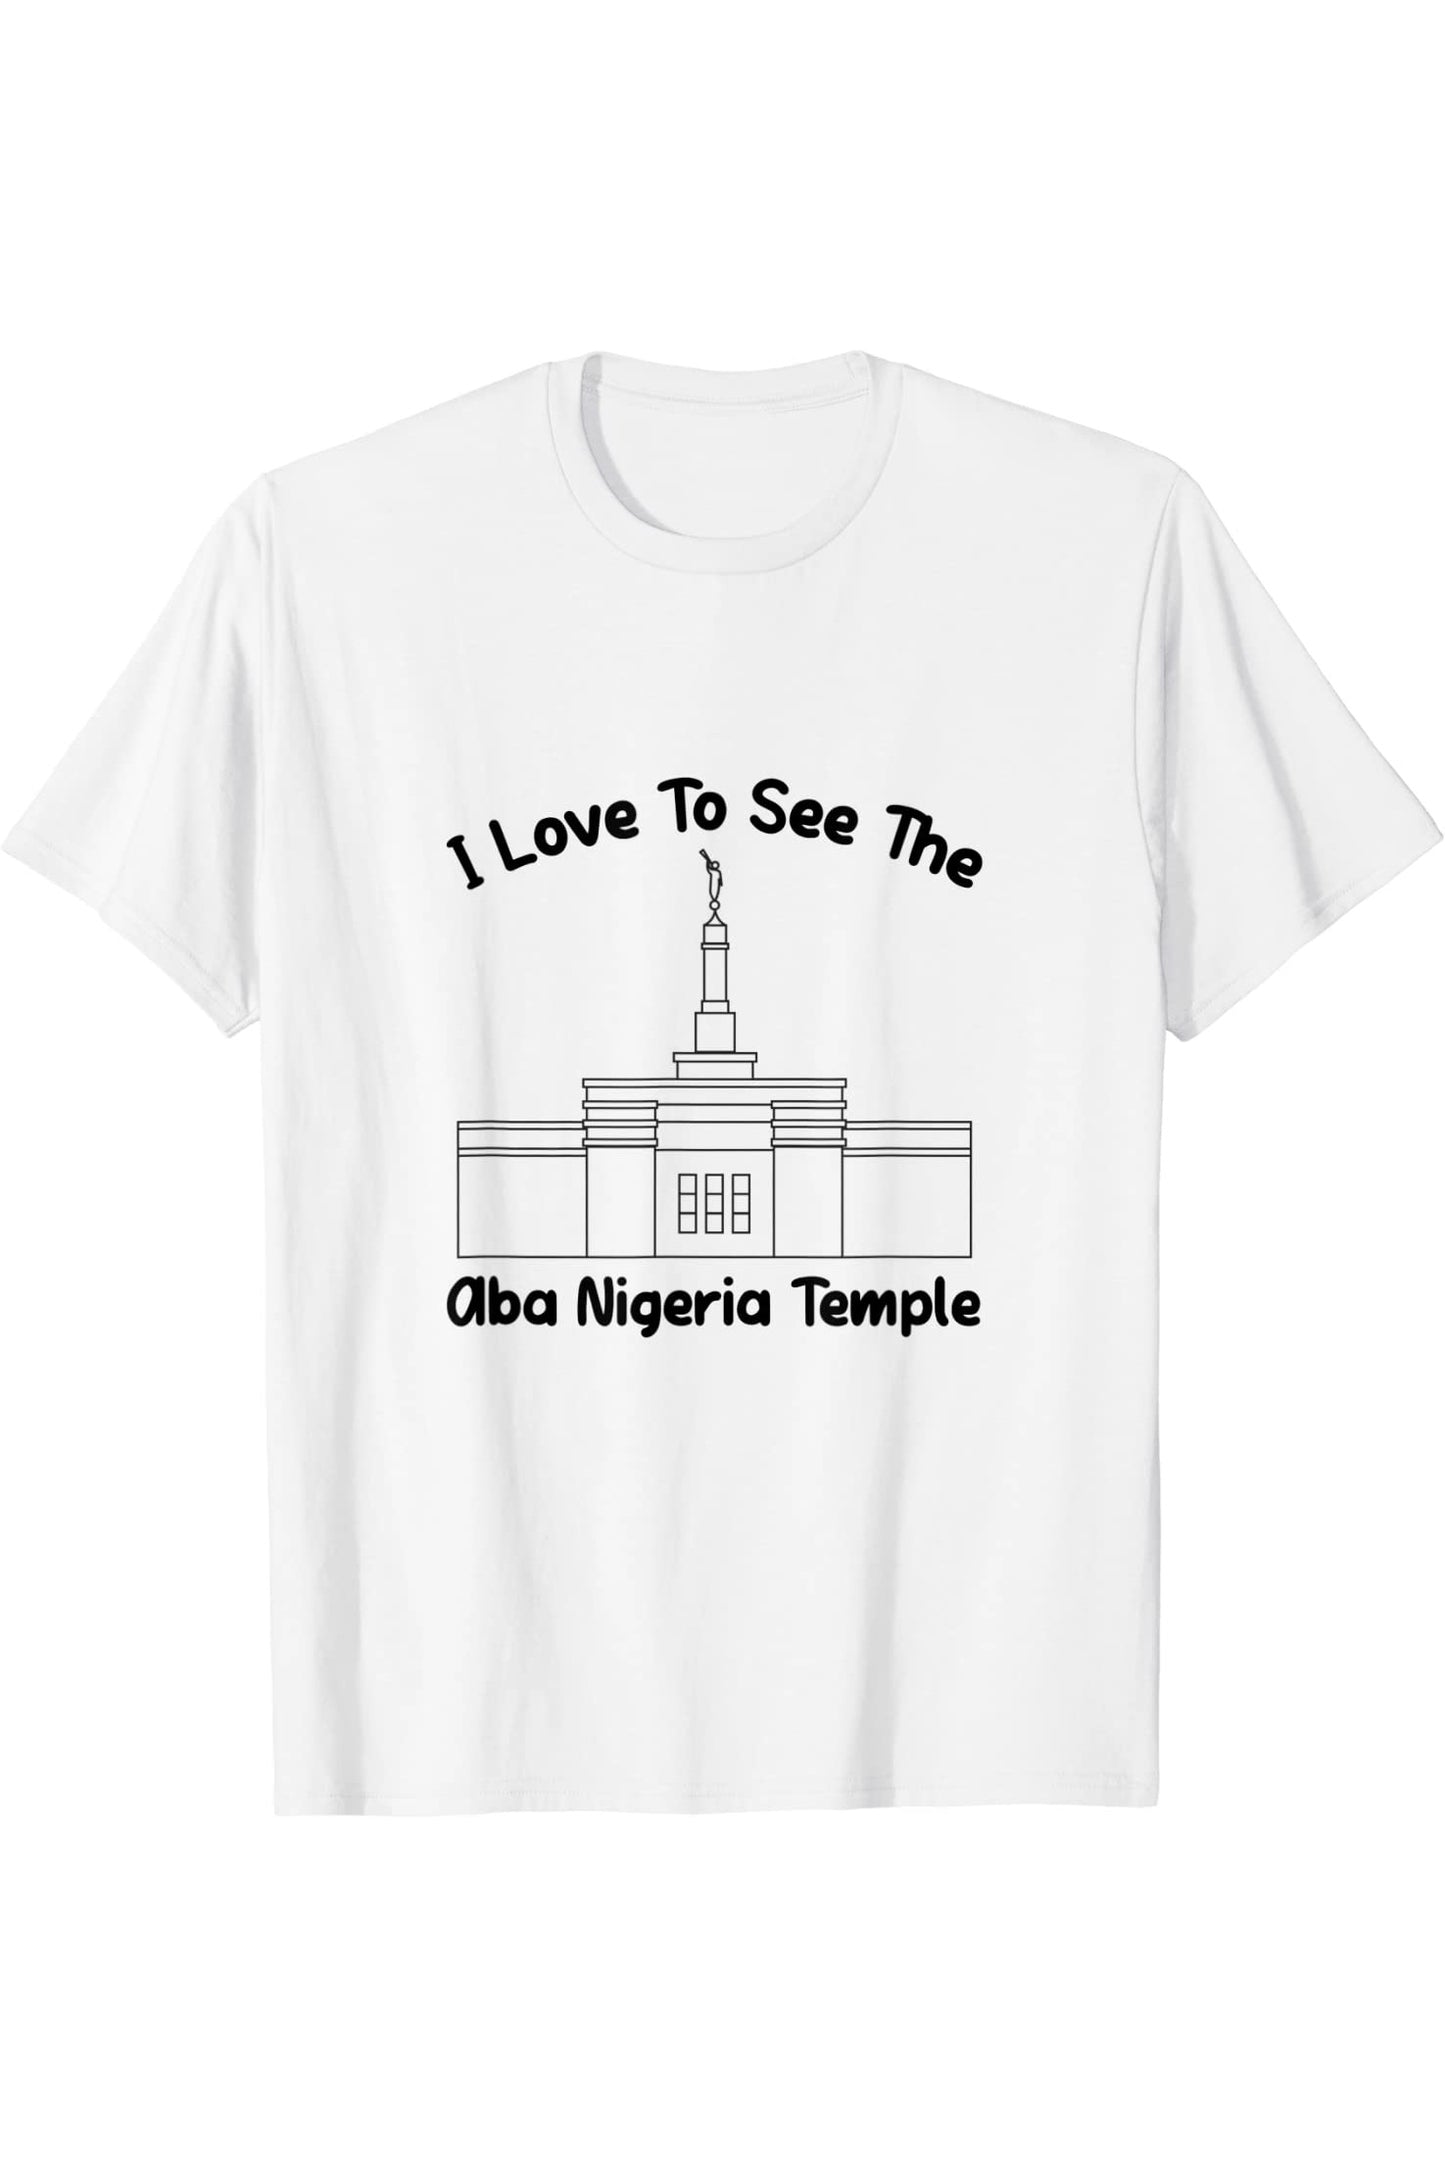 Aba Nigeria Temple T-Shirt - Primary Style (English) US